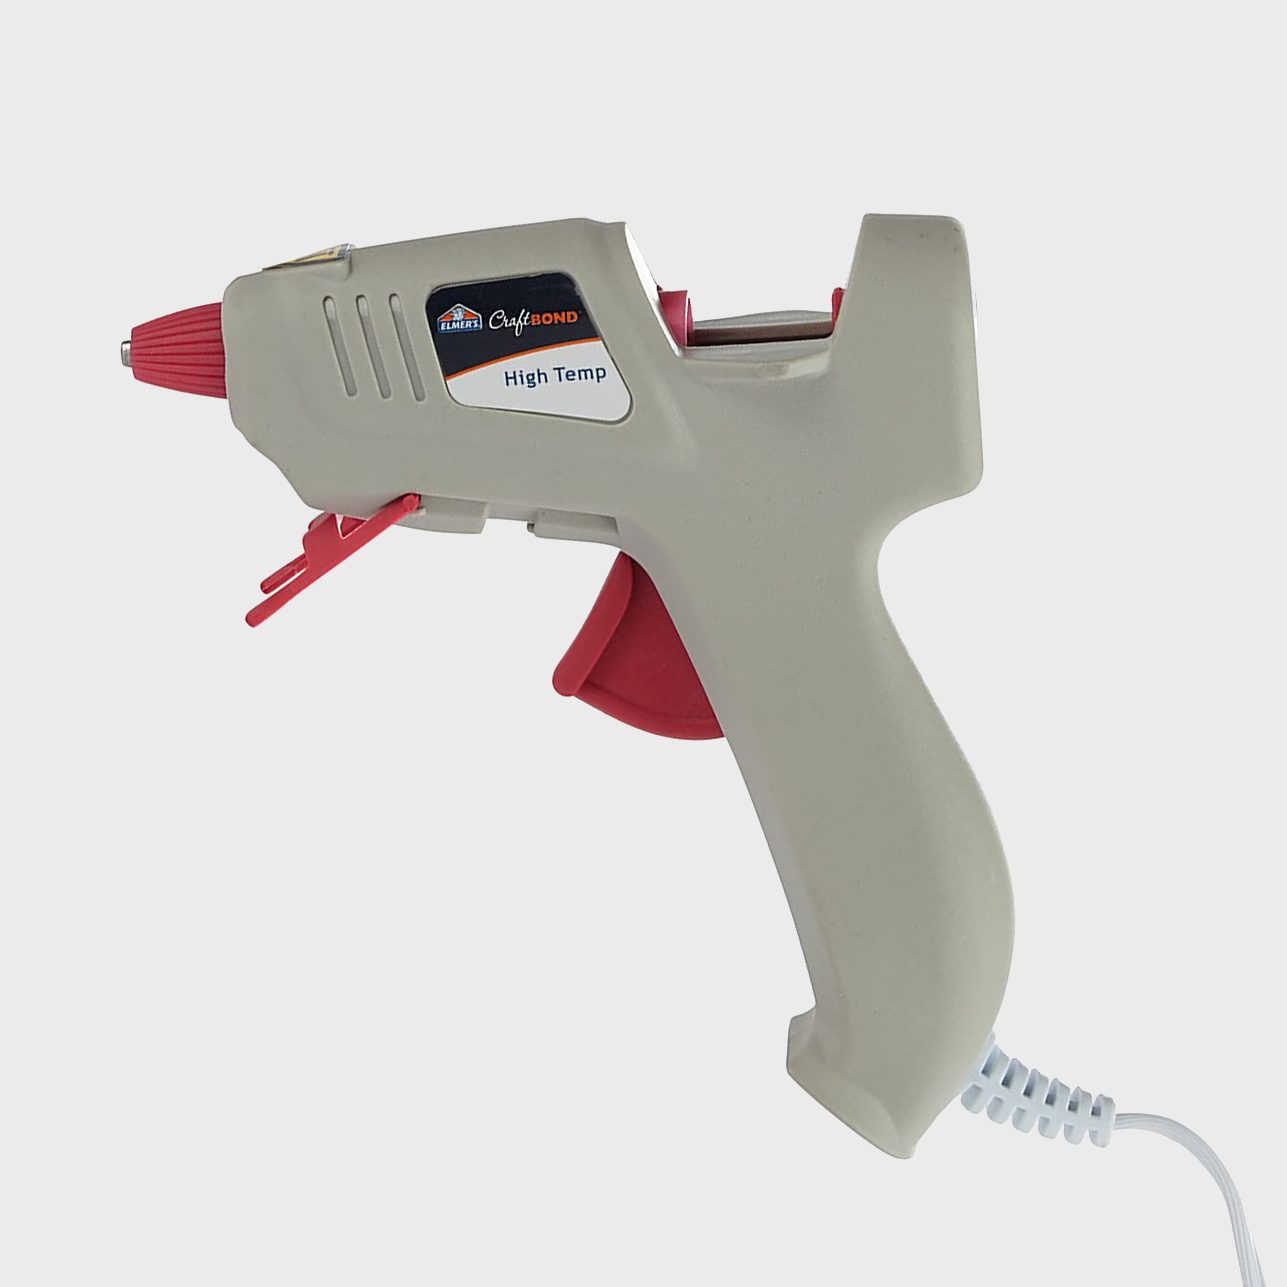 Elmers Craft Bond Hot Glue Gun Ecomm Via Amazon